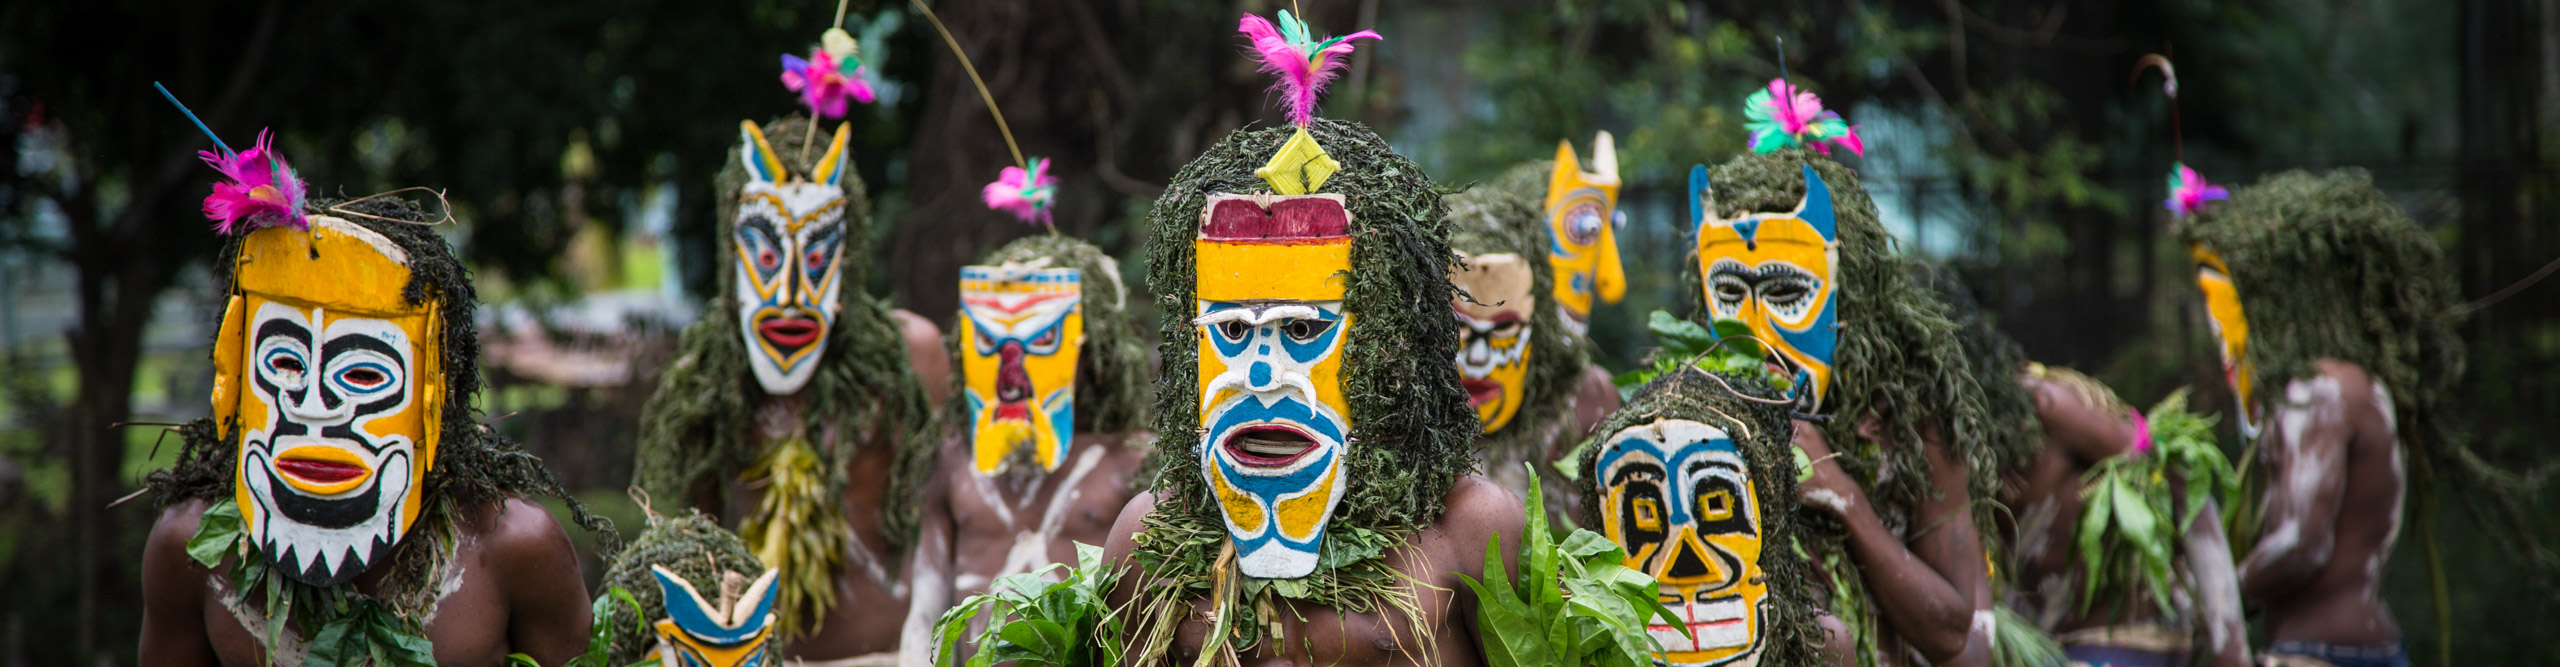 Rabaul mask festival in Papua New Guinea